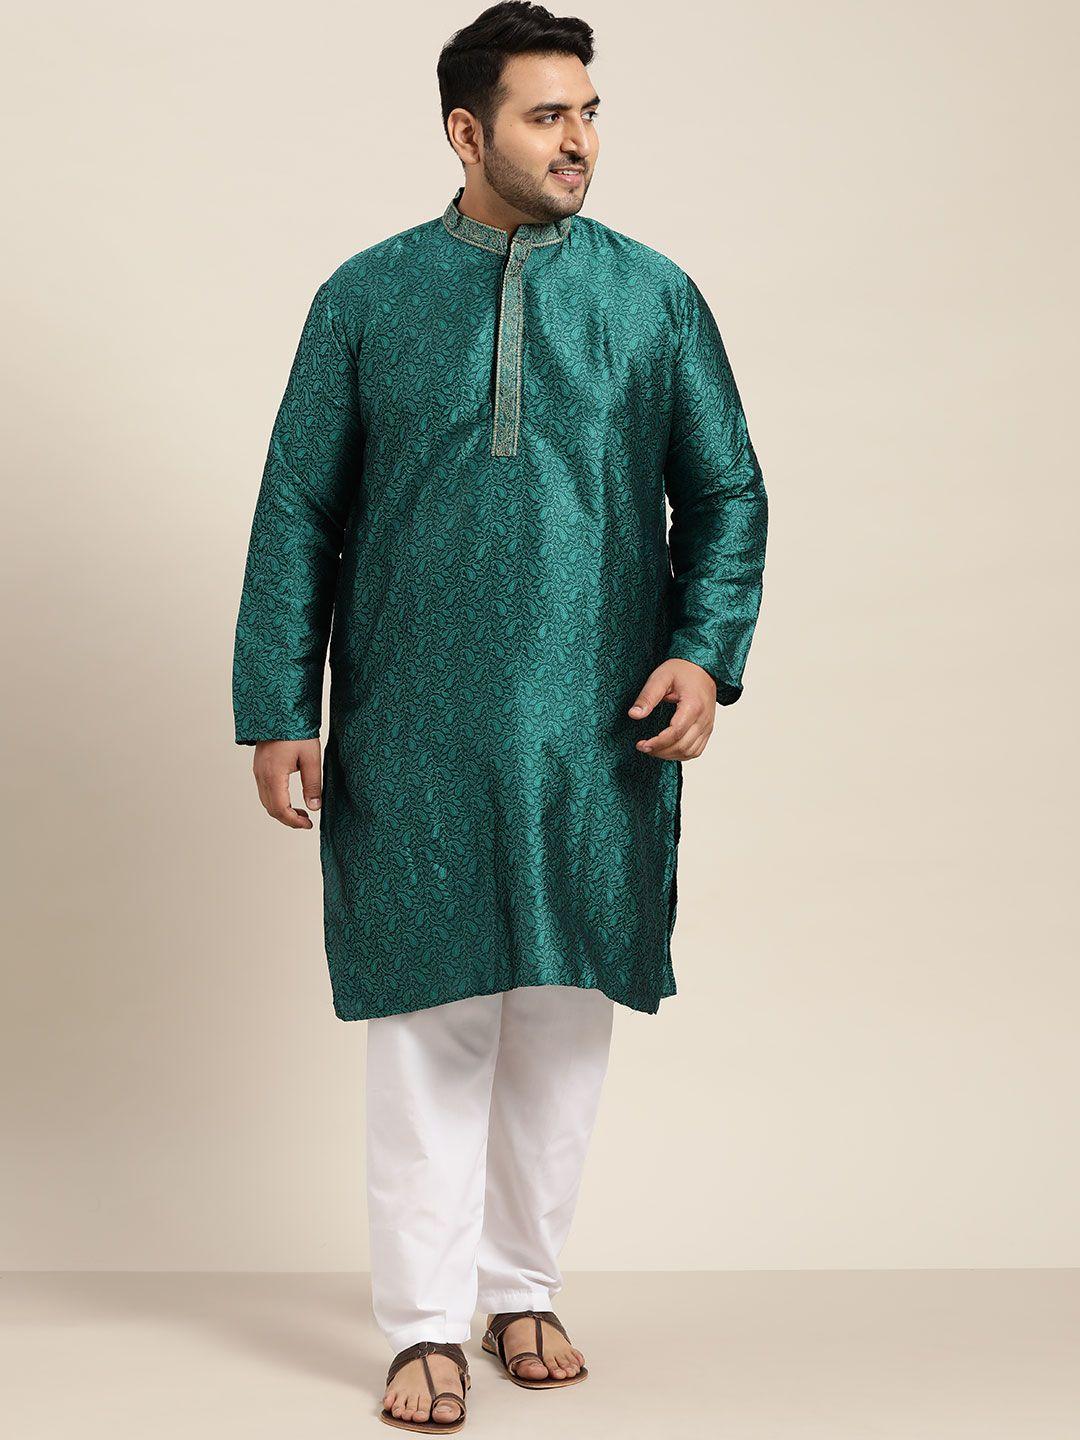 sojanya plus men teal green ethnic motifs embroidered thread work kurta